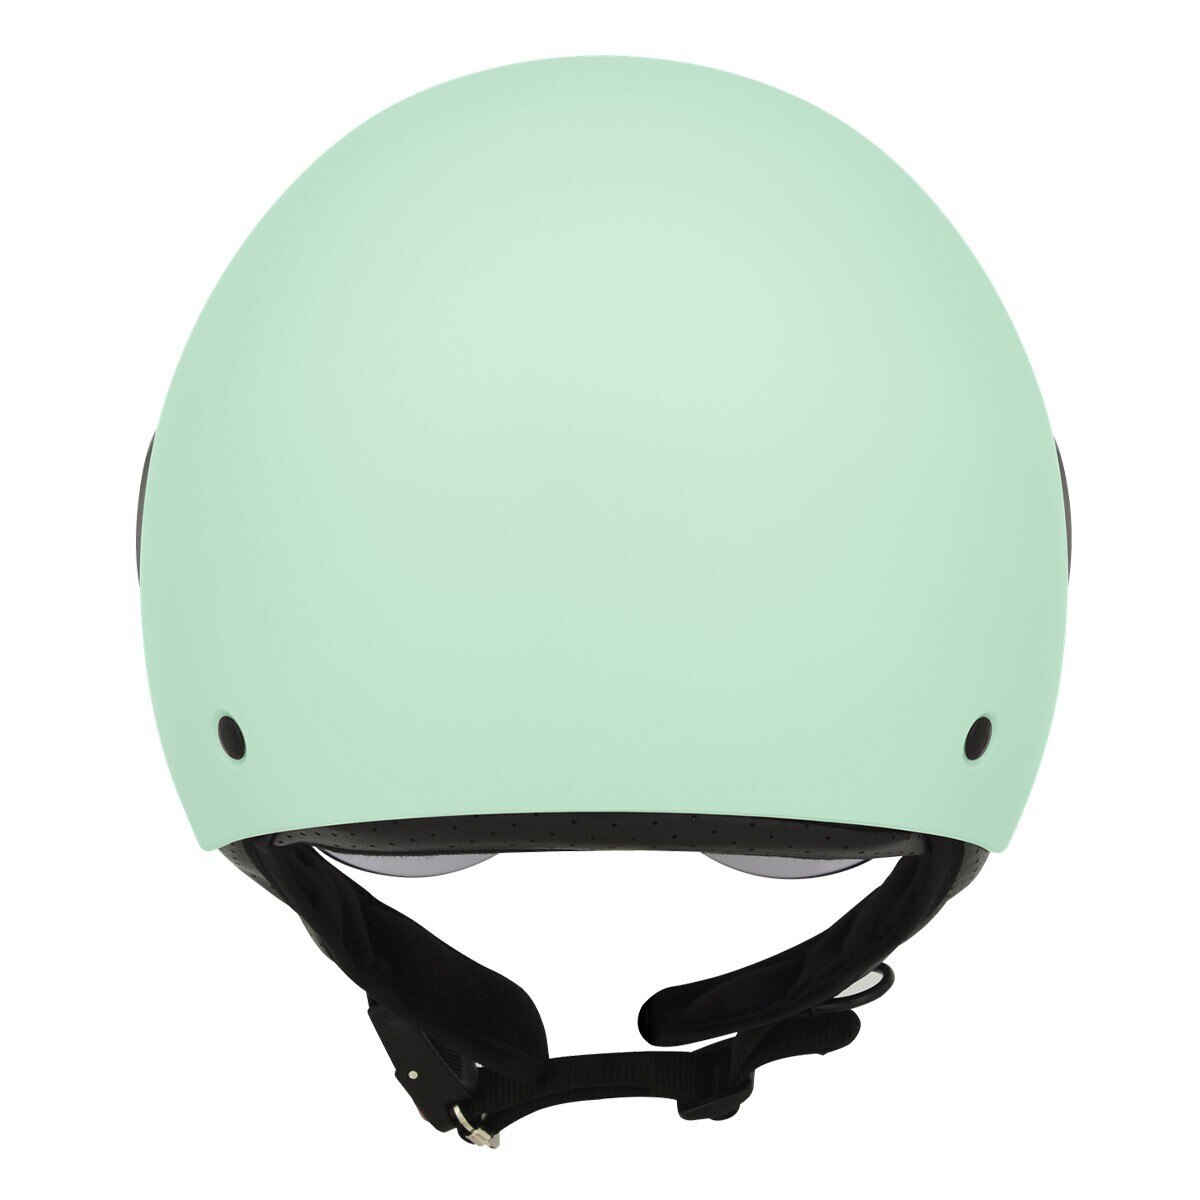 M2R 機車半露臉式防護頭盔 M505 S 消光粉綠